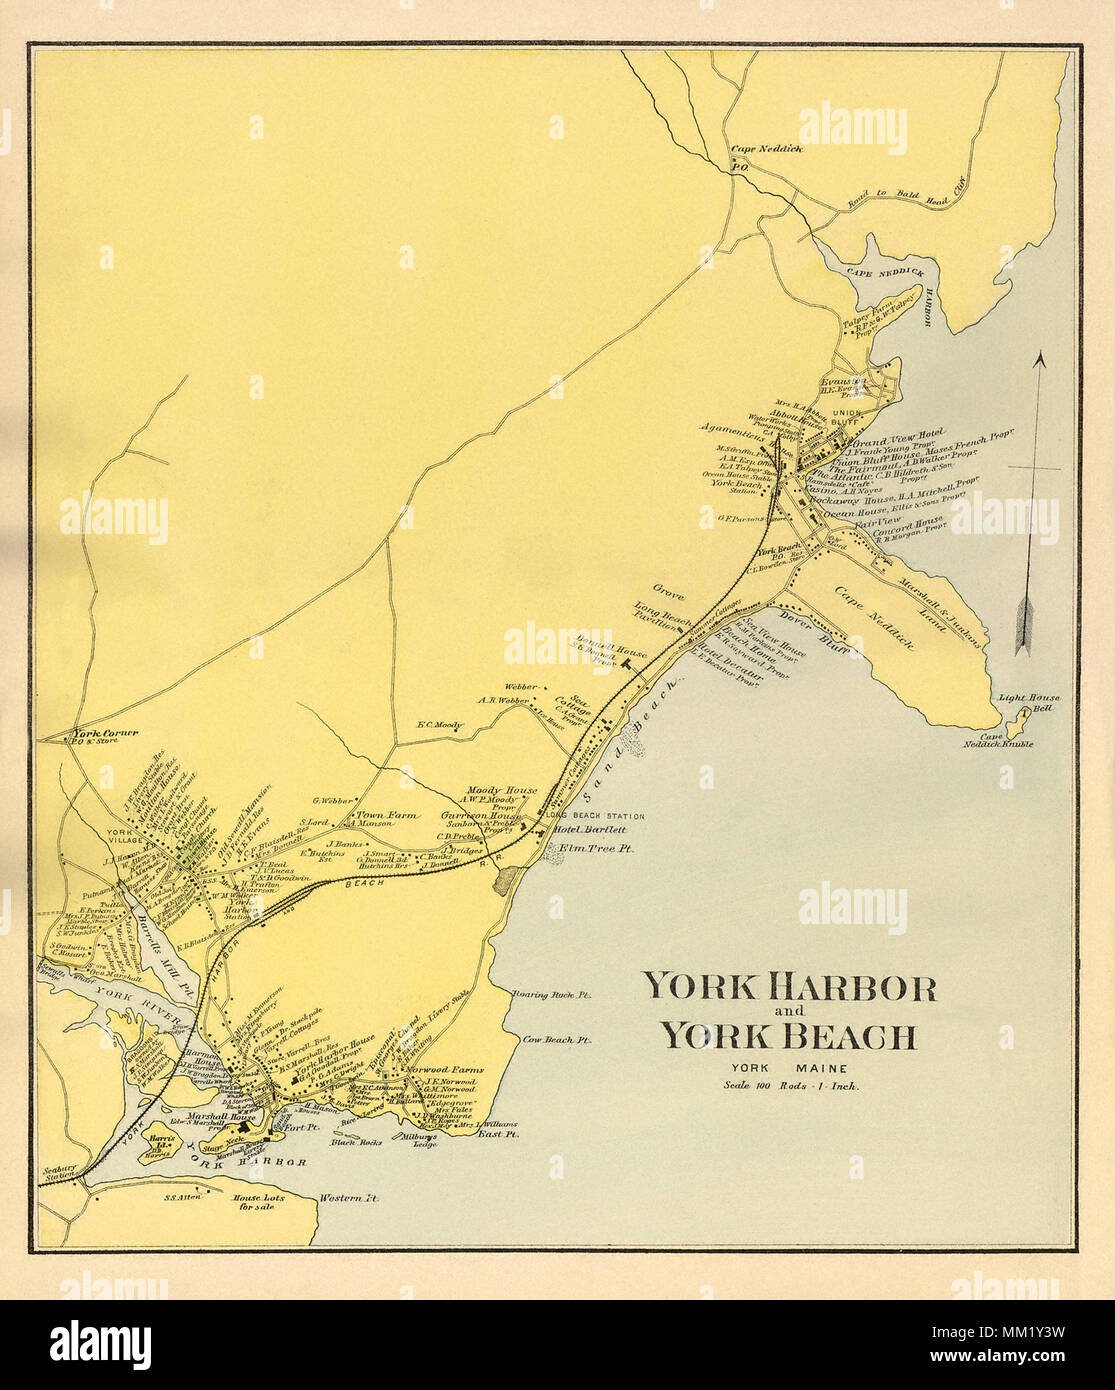 Map of York Harbor and York Beach. 1890 Stock Photo - Alamy